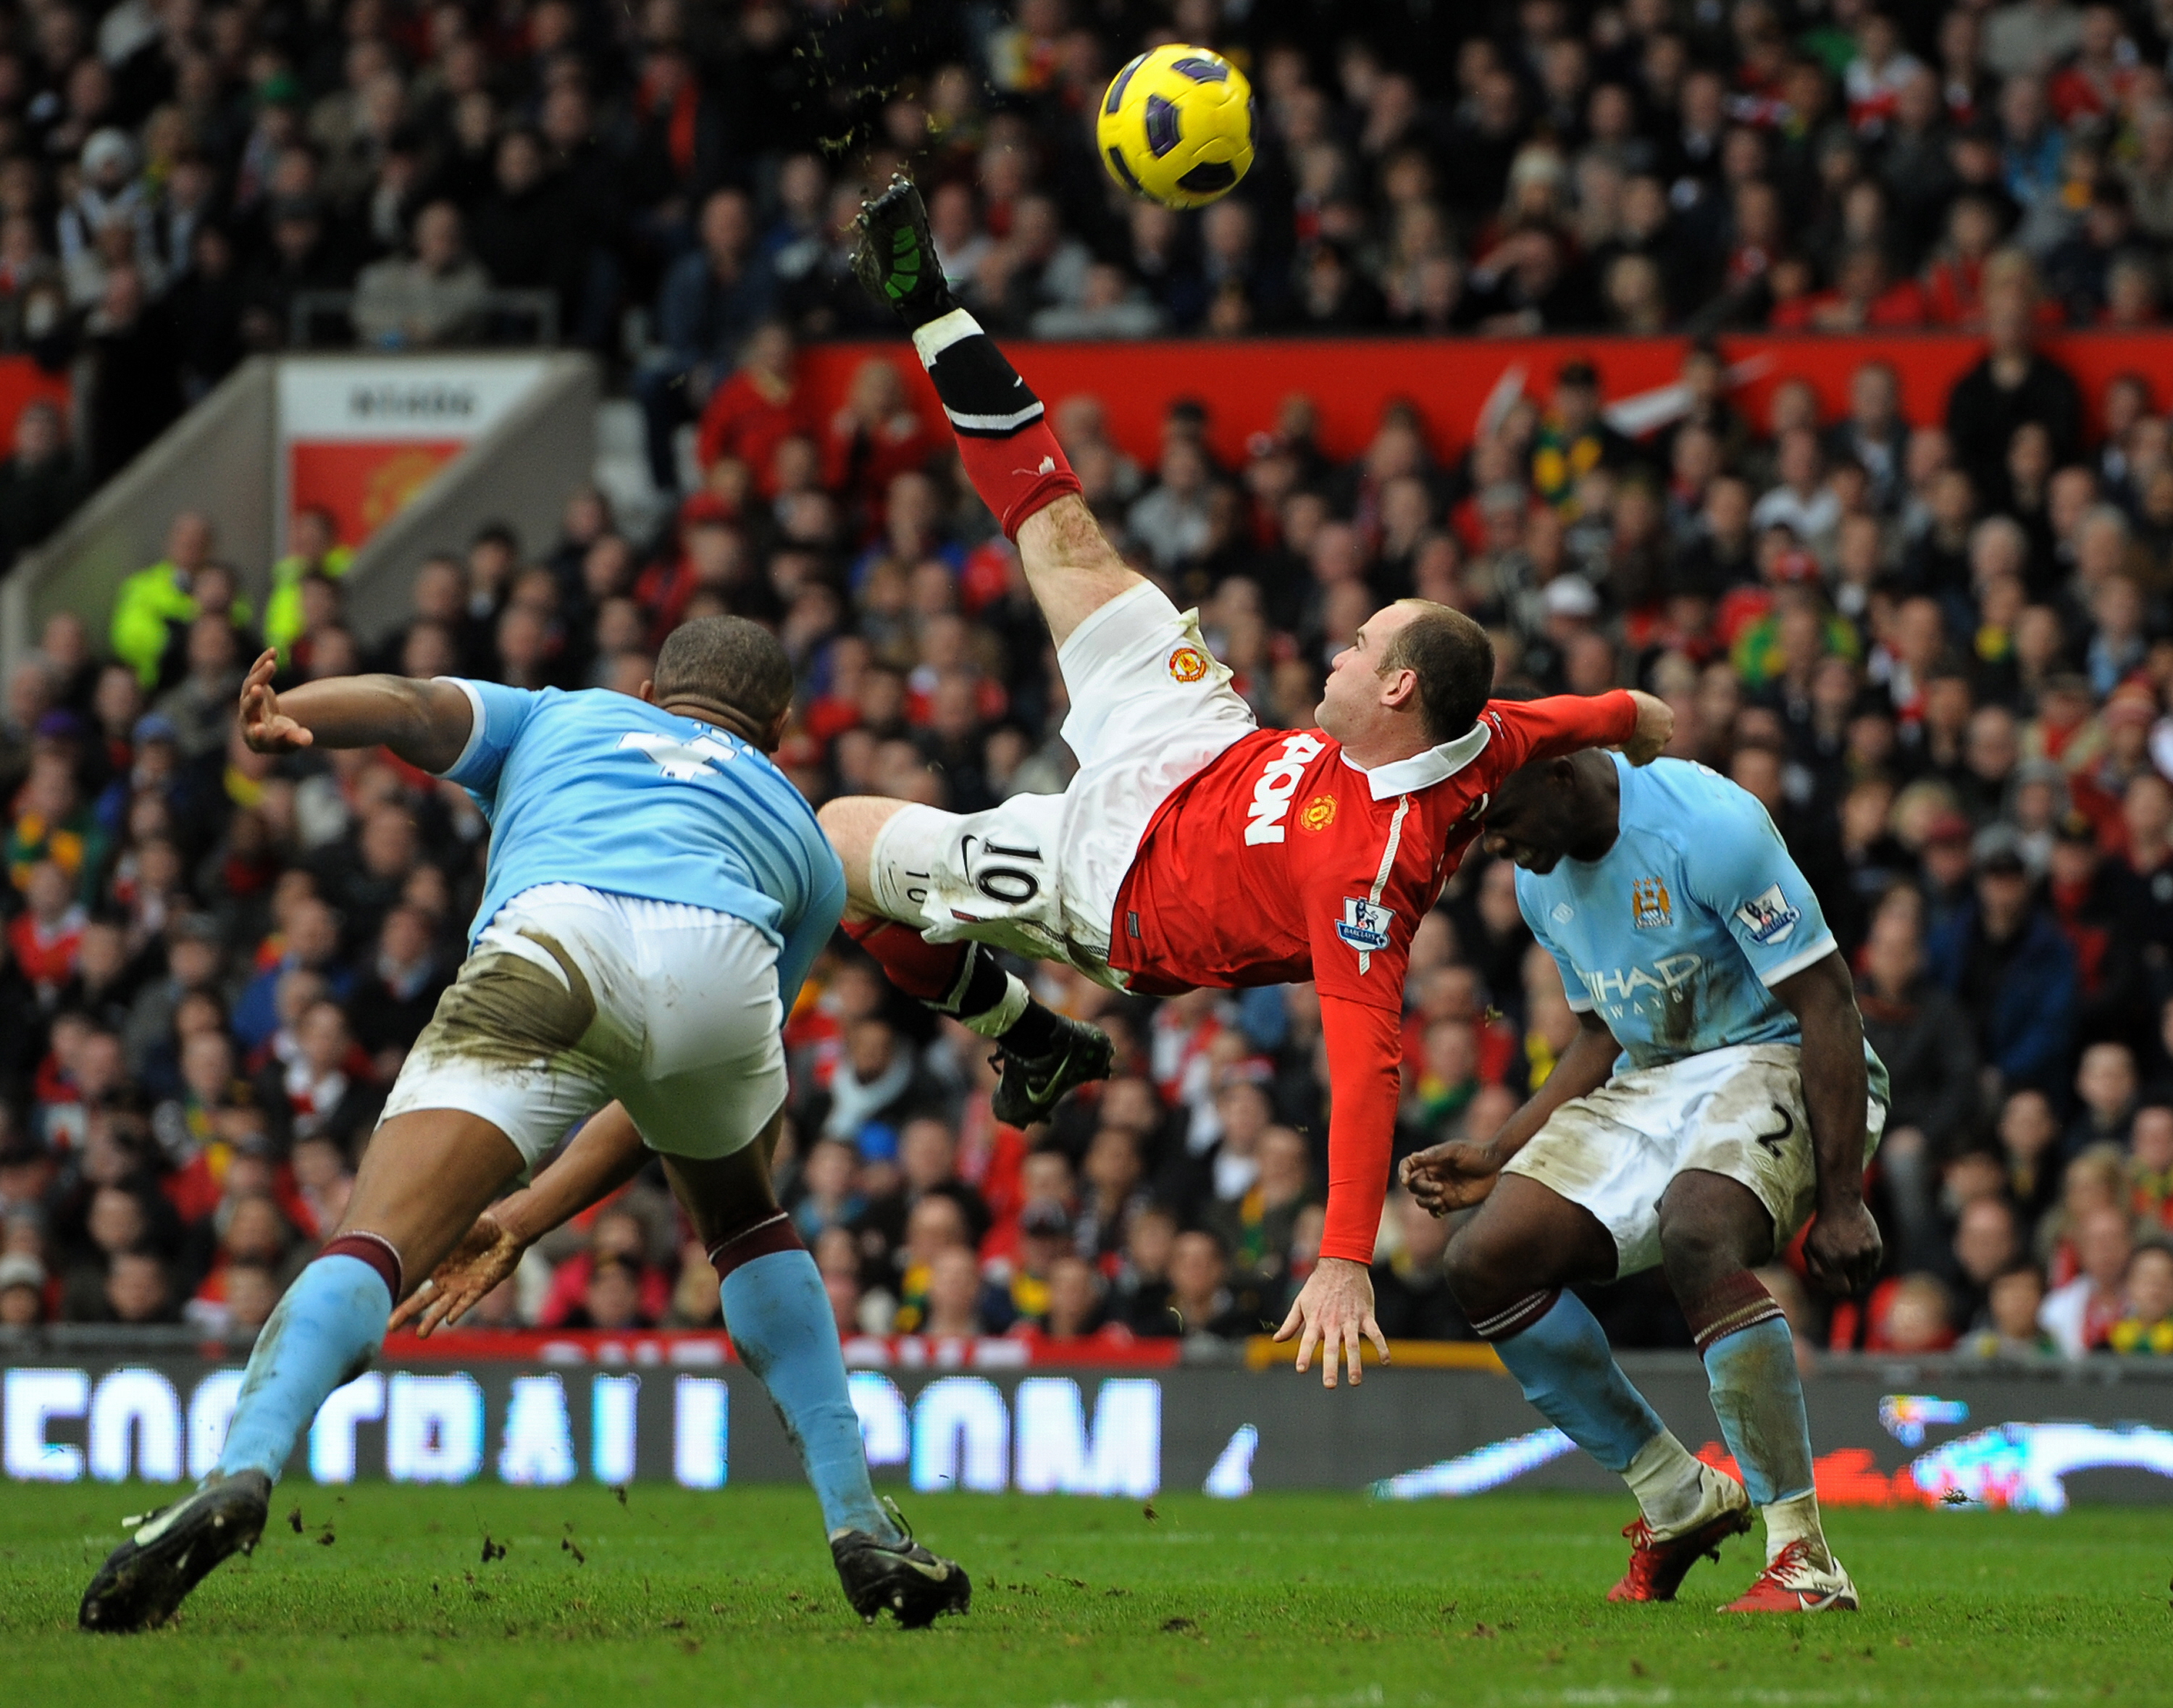 Wayne Rooney: One of England's greatest